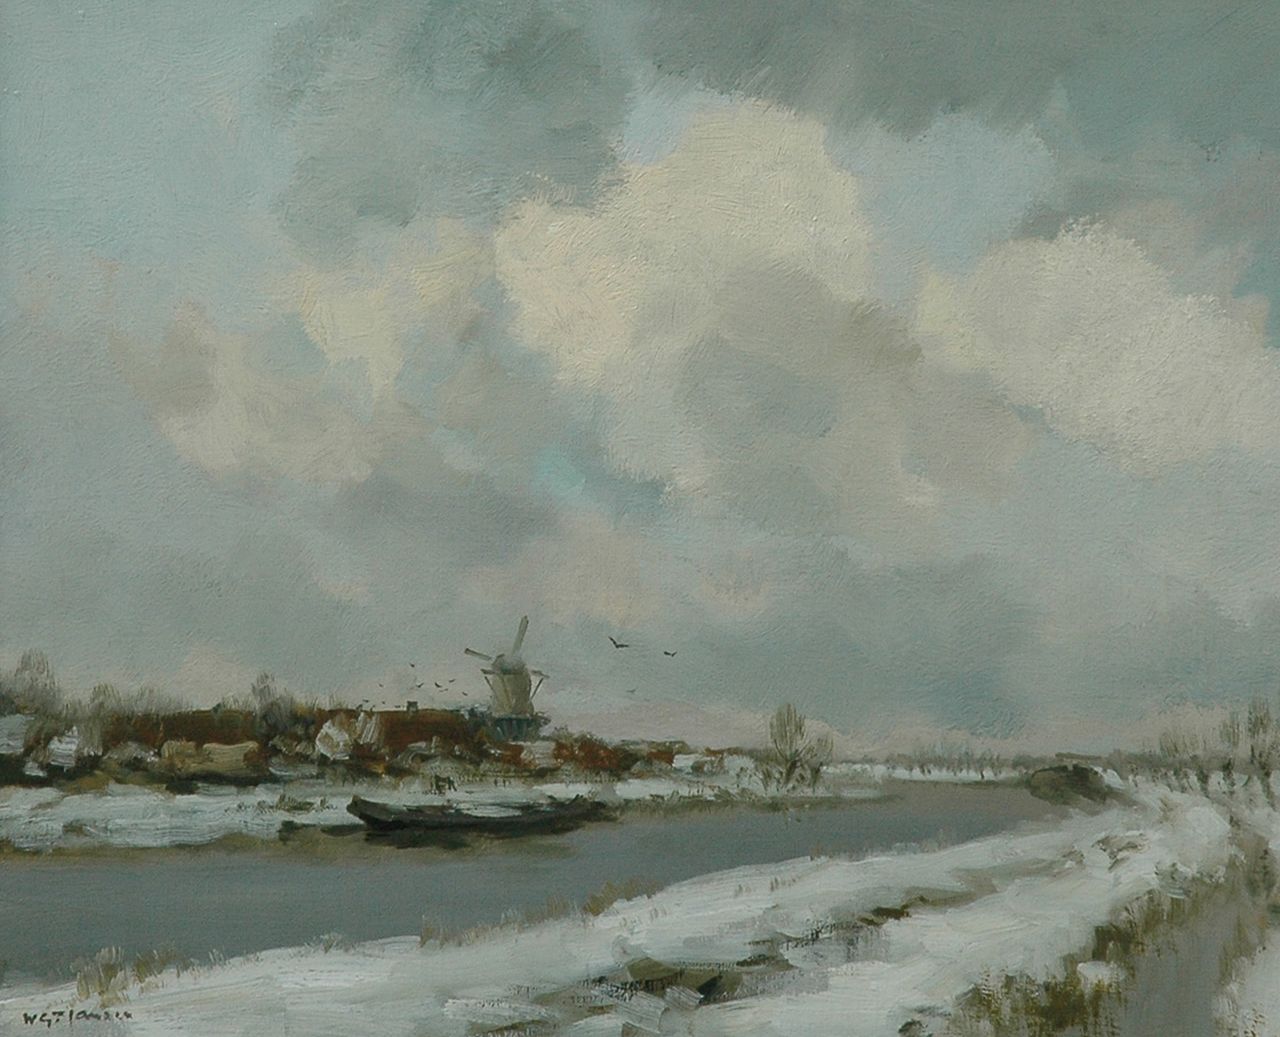 Jansen W.G.F.  | 'Willem' George Frederik Jansen, Winterse poldervaart met molen, olieverf op doek 50,0 x 60,2 cm, gesigneerd linksonder